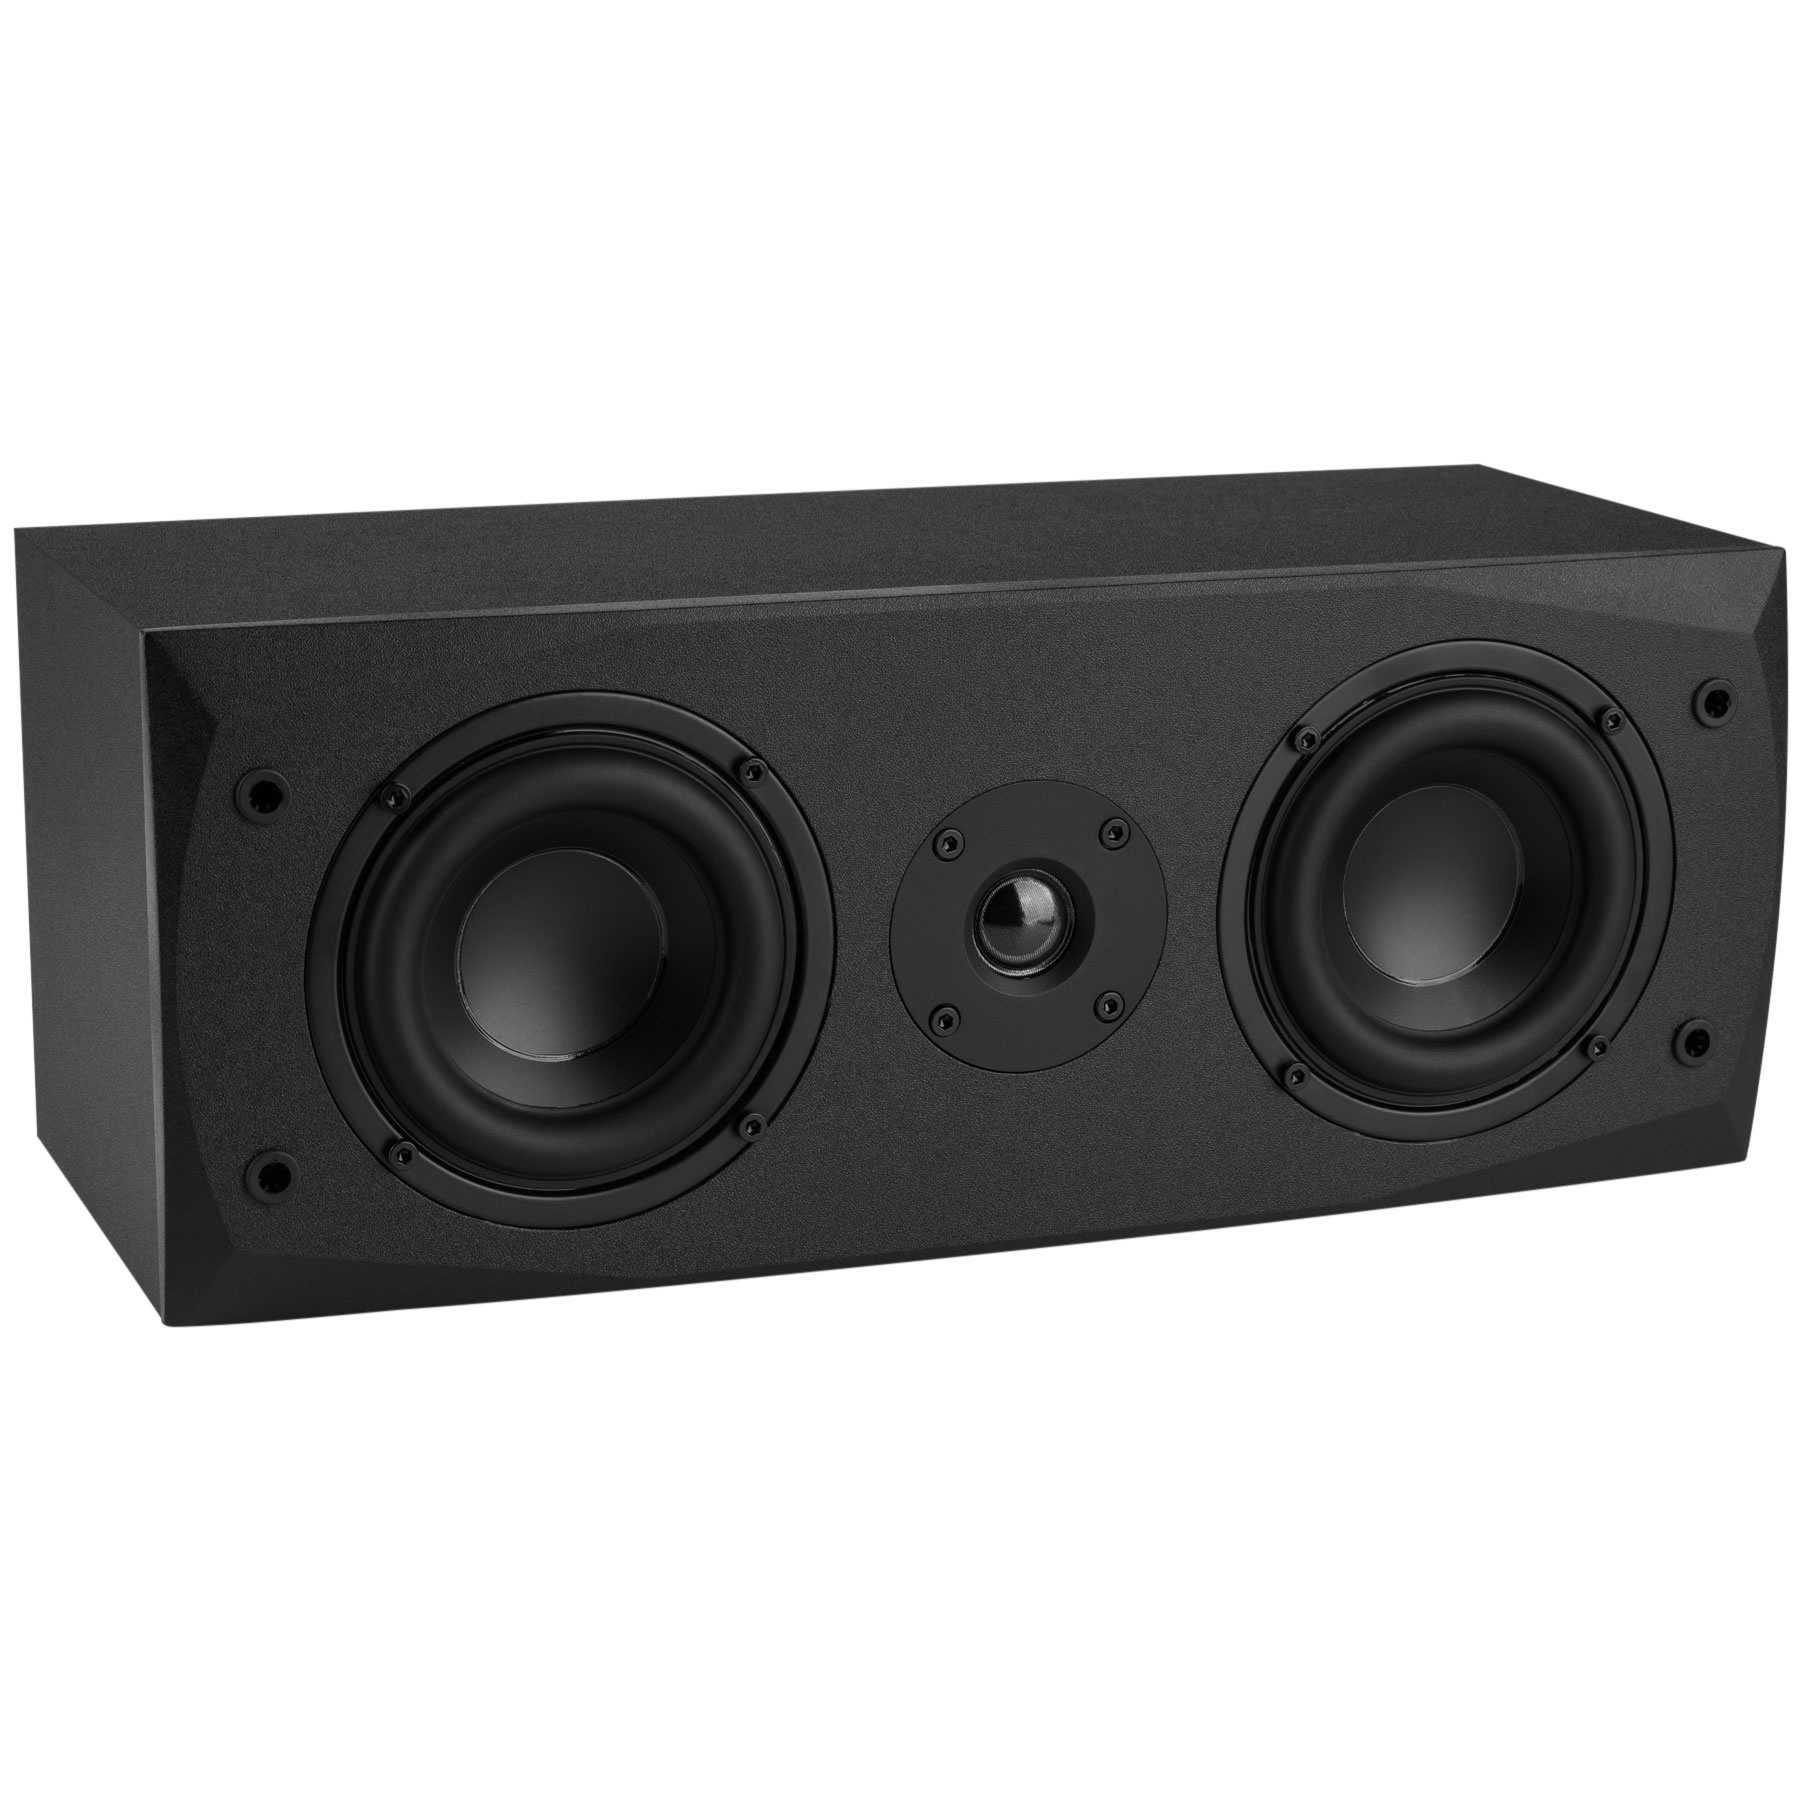 Boxe centru - Boxa de centru Dayton Audio MK442 Black, audioclub.ro